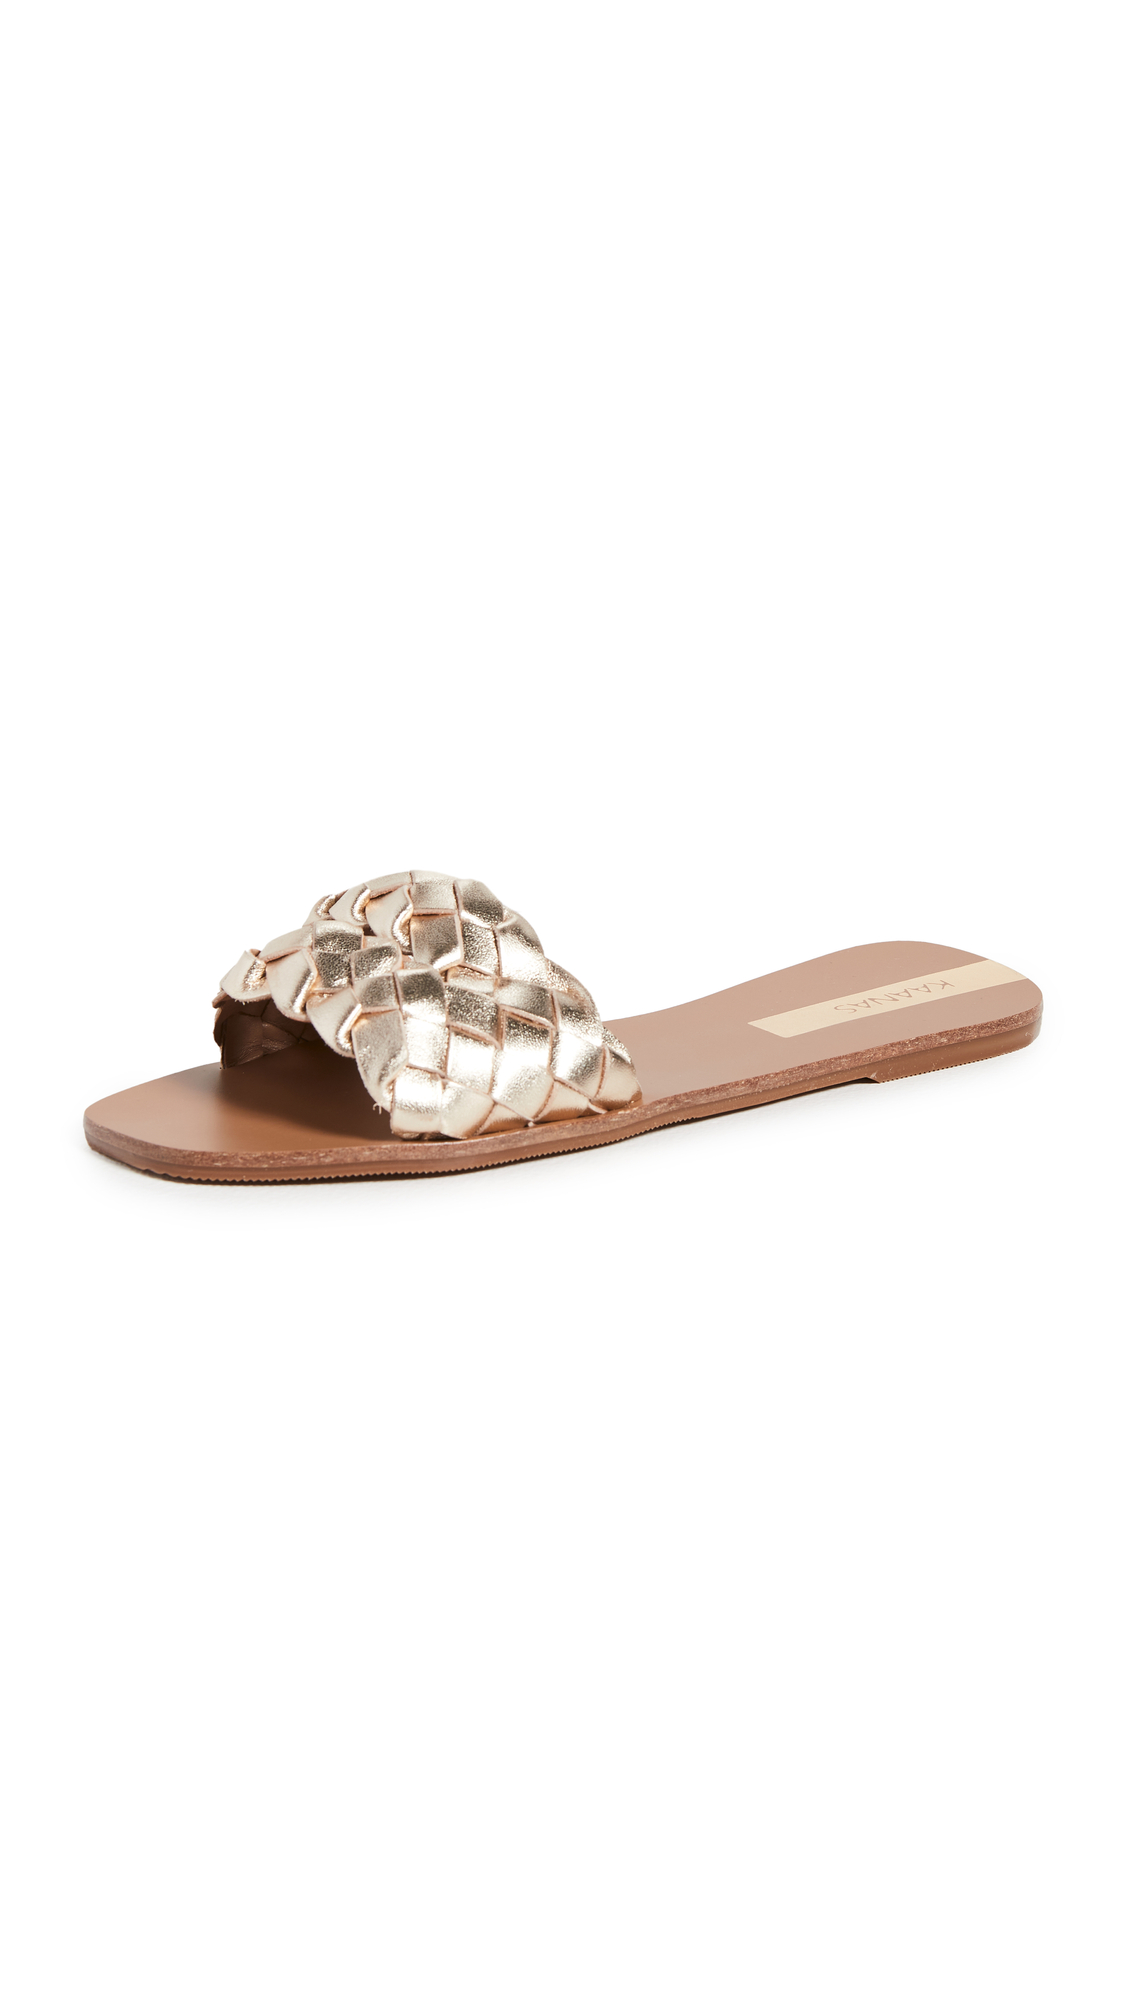 Kaanas braided gold sandals, best affordable slide sandals - Meagan's Moda